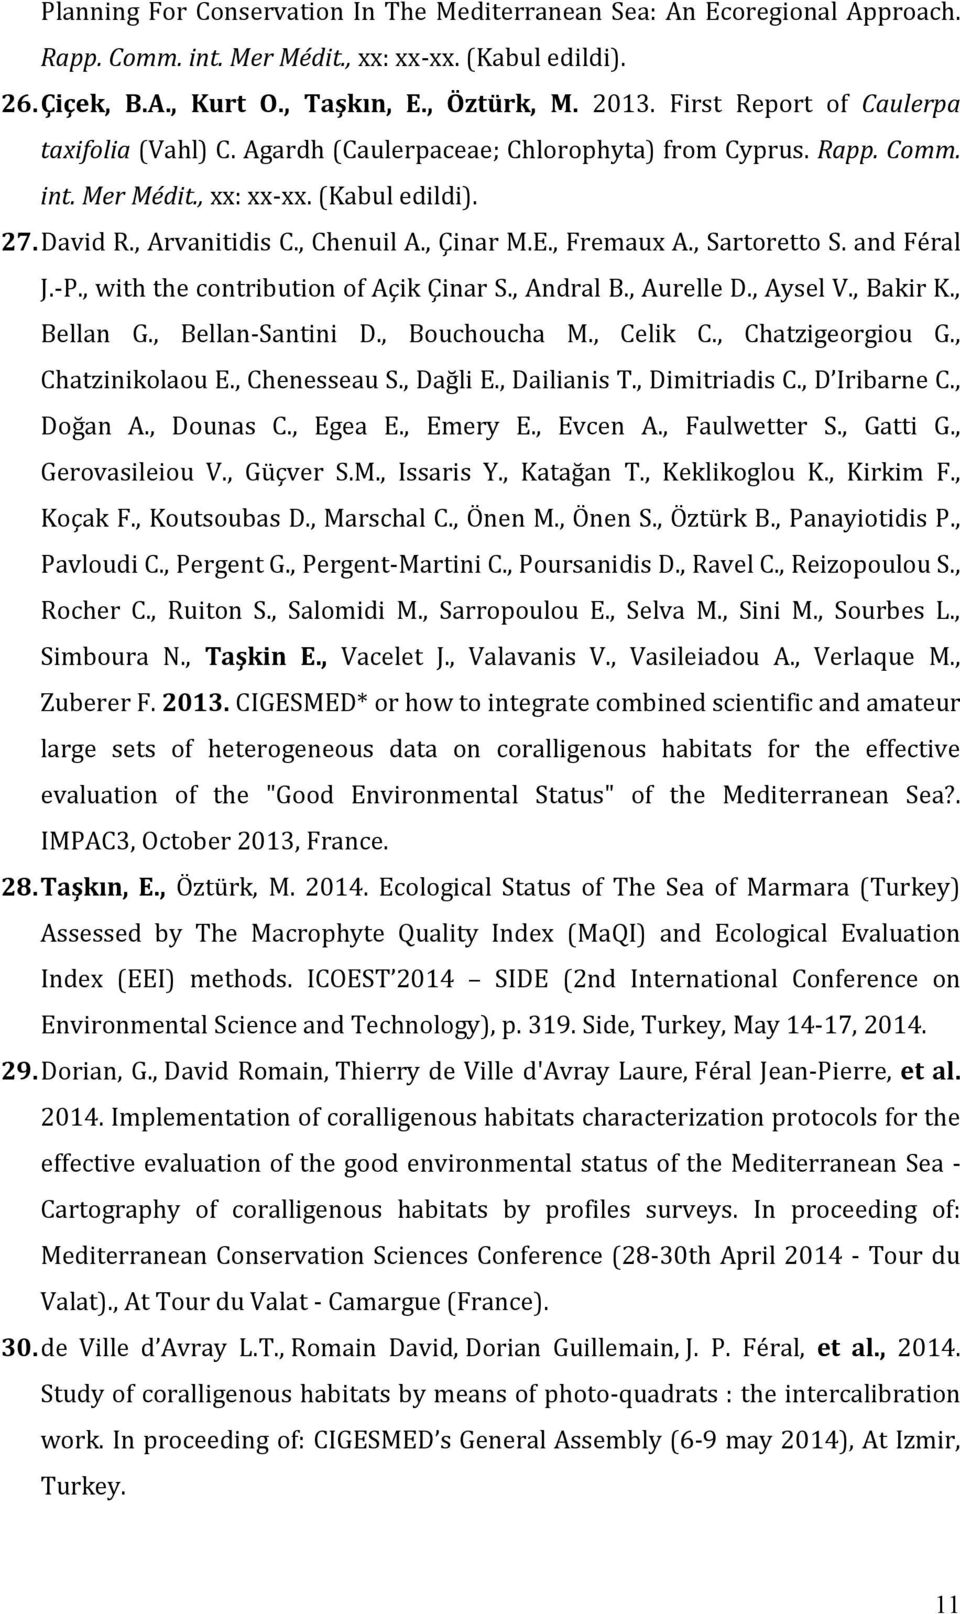 E., Fremaux A., Sartoretto S. and Féral J.-P., with the contribution of Açik Çinar S., Andral B., Aurelle D., Aysel V., Bakir K., Bellan G., Bellan-Santini D., Bouchoucha M., Celik C.